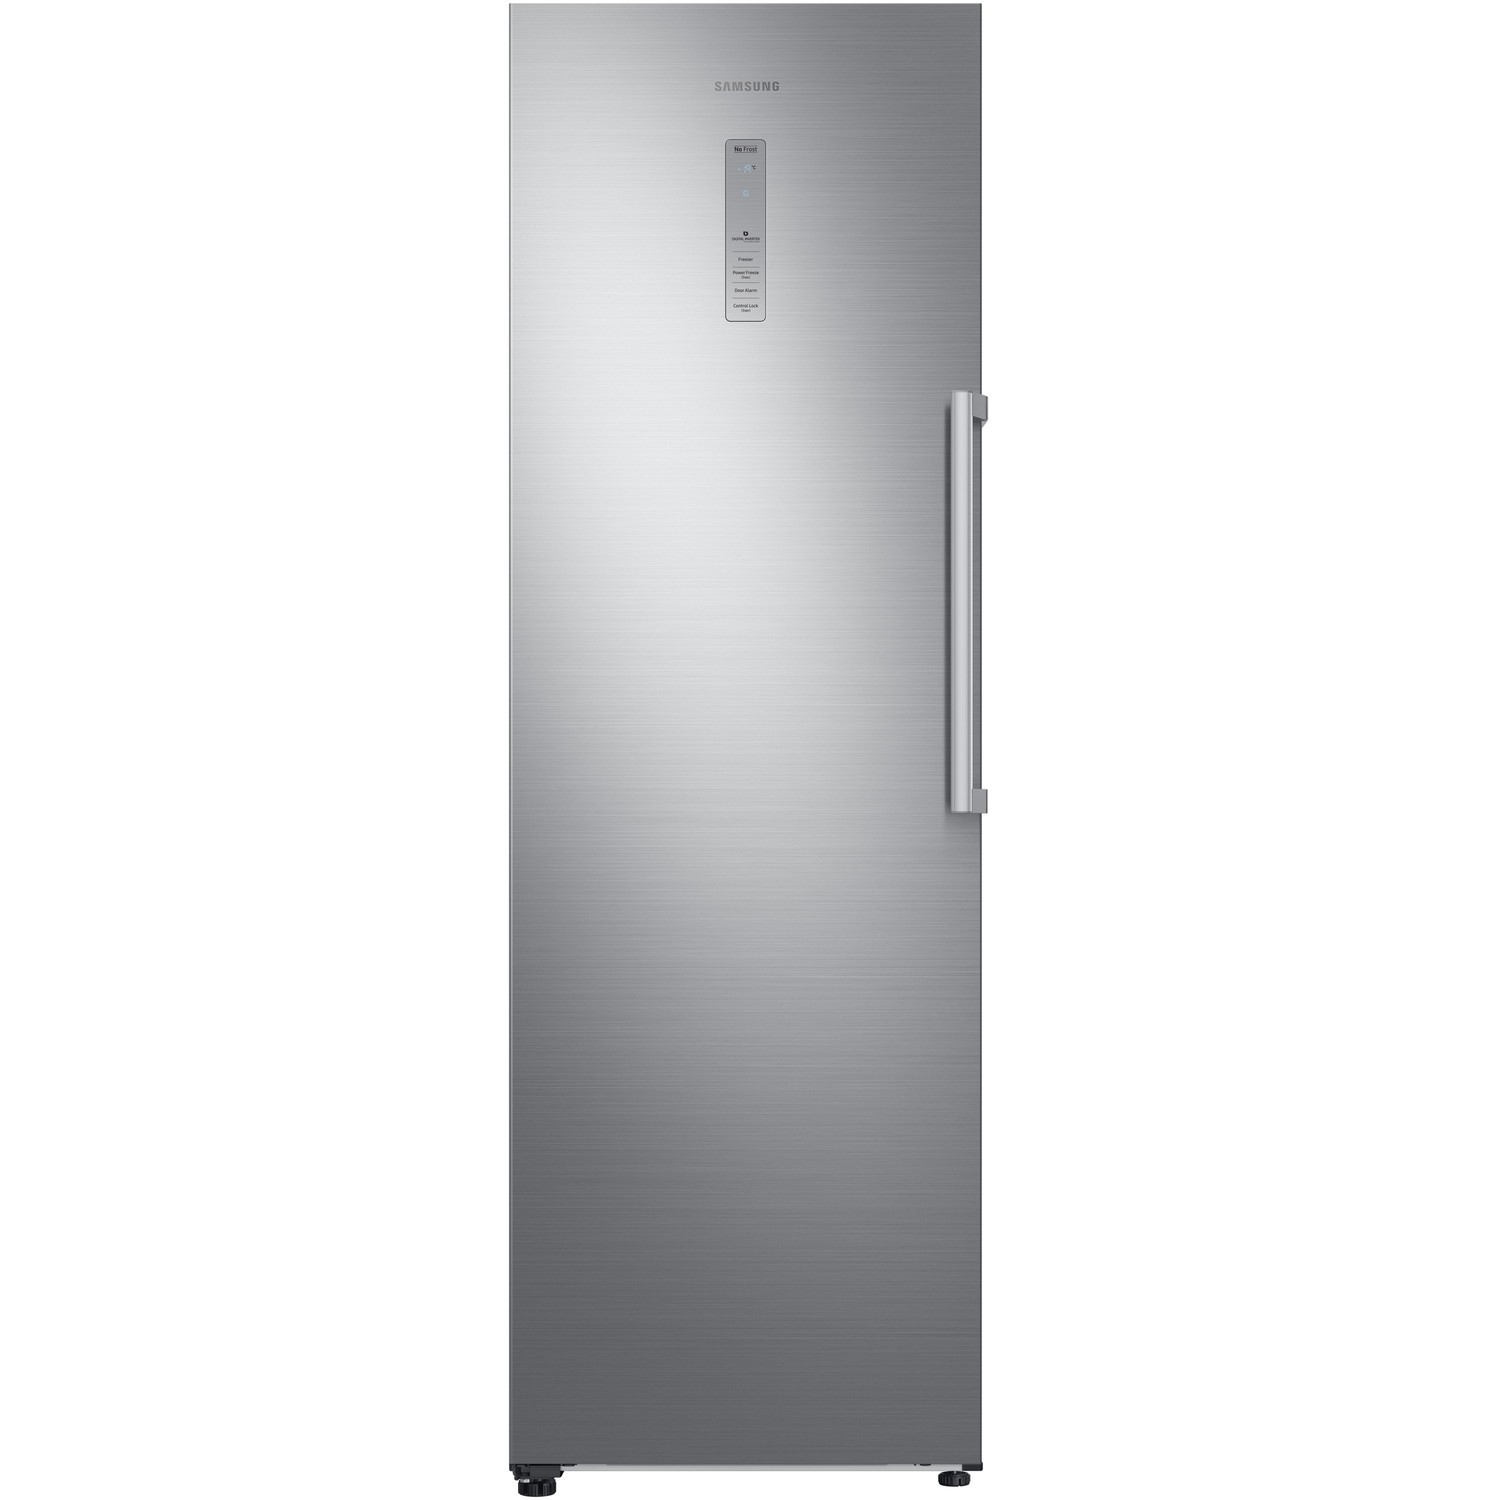 Samsung 315L Upright Freestanding Freezer - Refined Steel